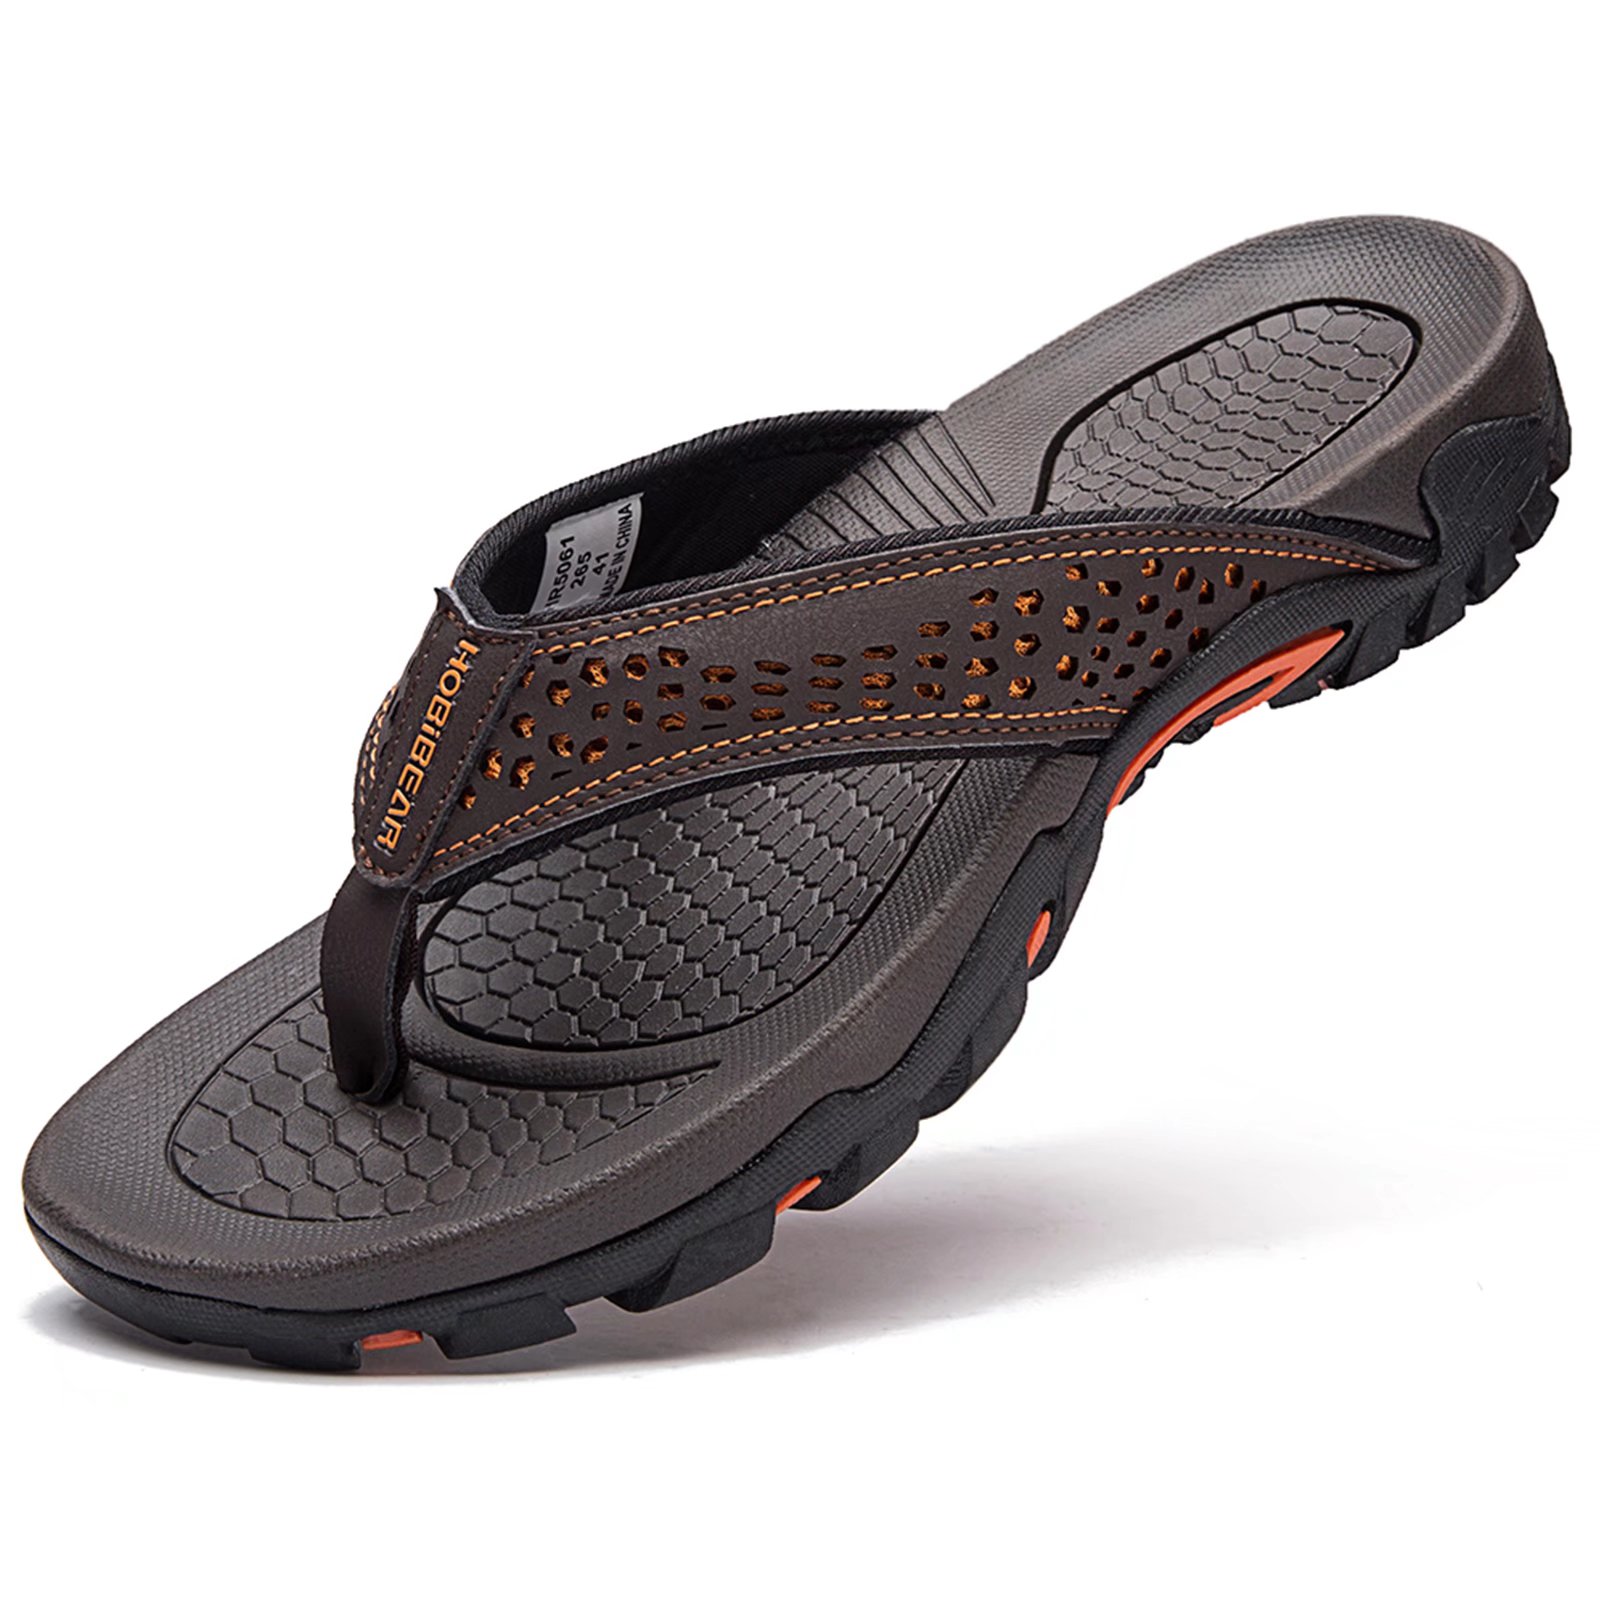 Midsumdr Flip Flops for Men, Men's Beach Sandals, Quick-Dry Flip-Flop ...